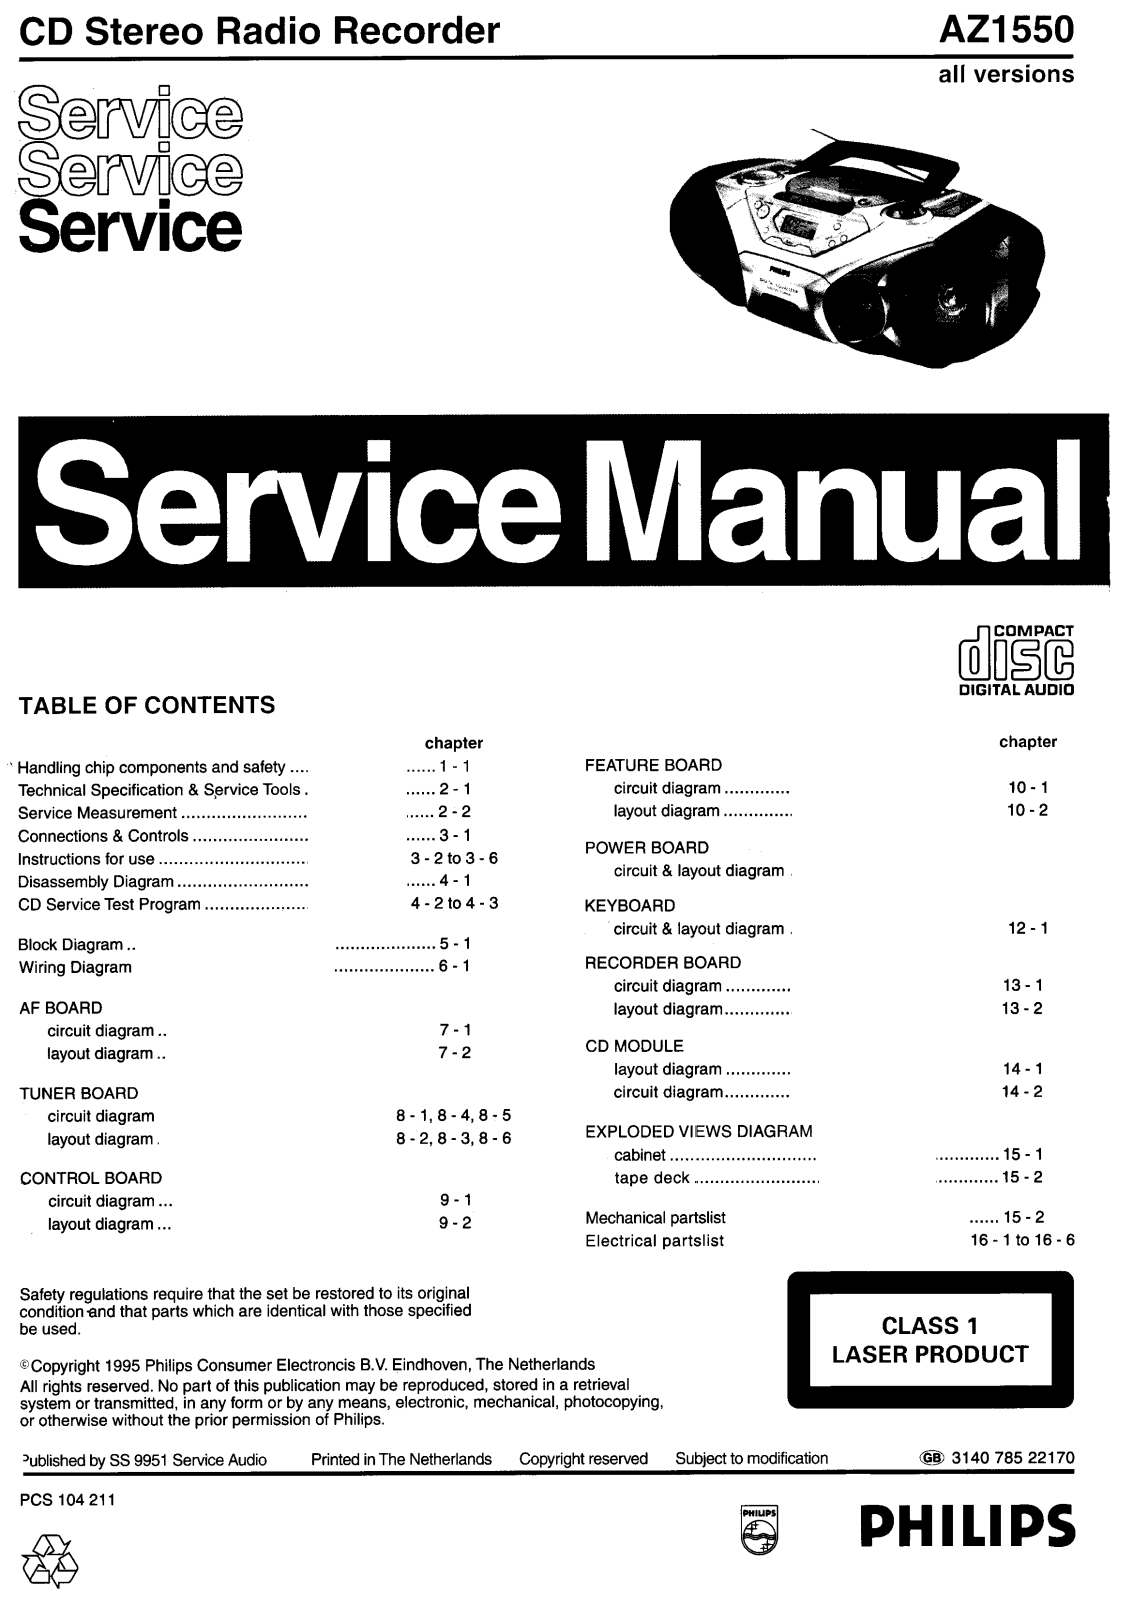 PHILIPS AZ1550 Service Manual